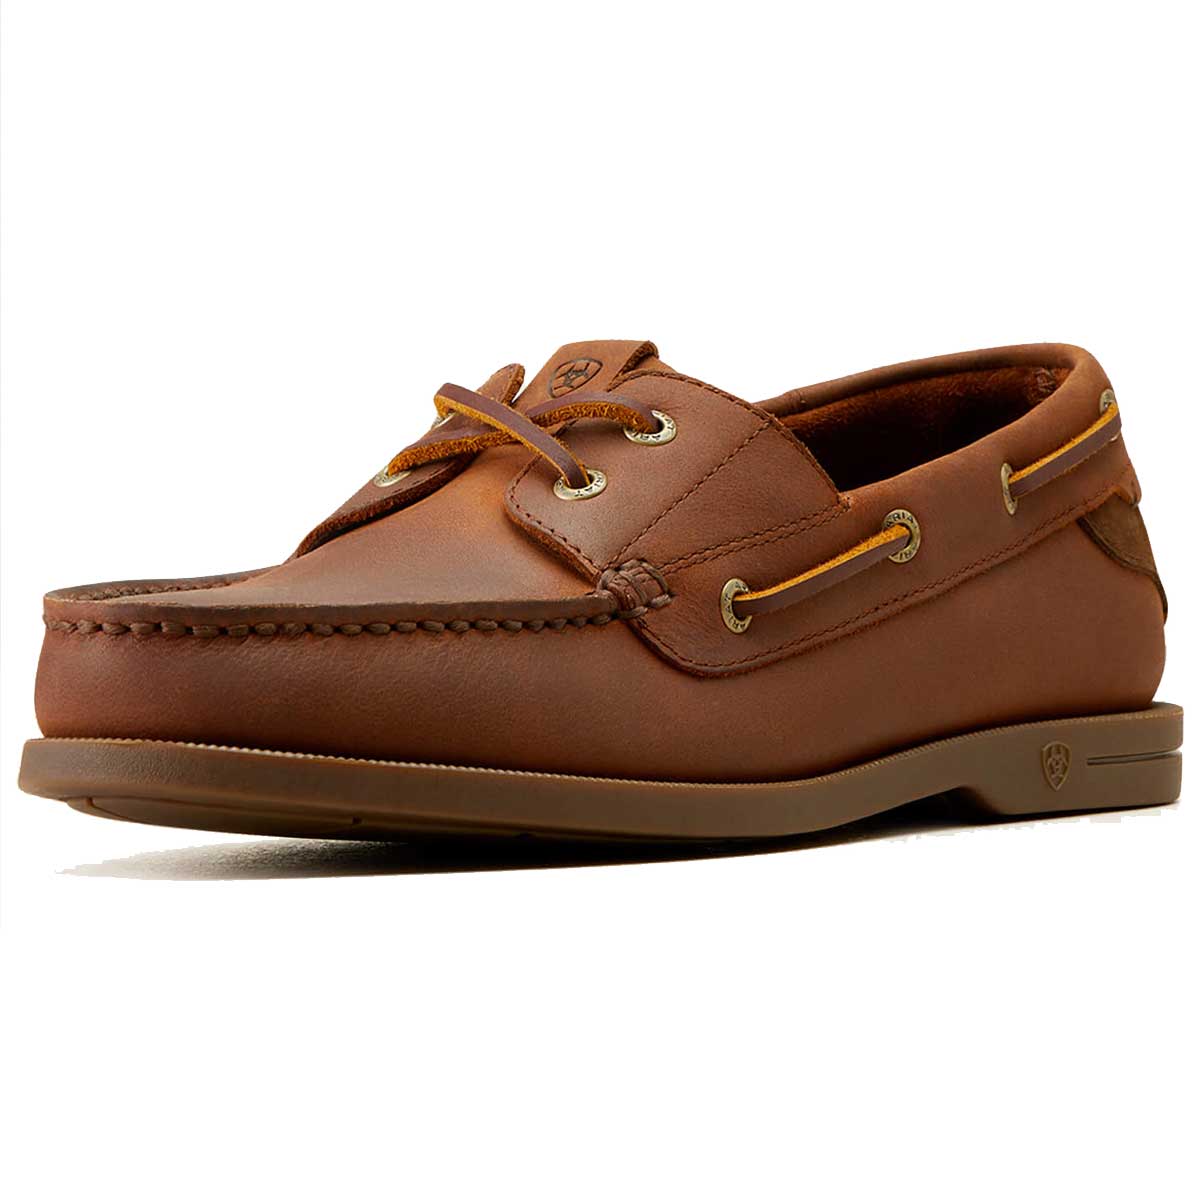 ARIAT Antigua Deck Shoes - Mens - Bridle Brown